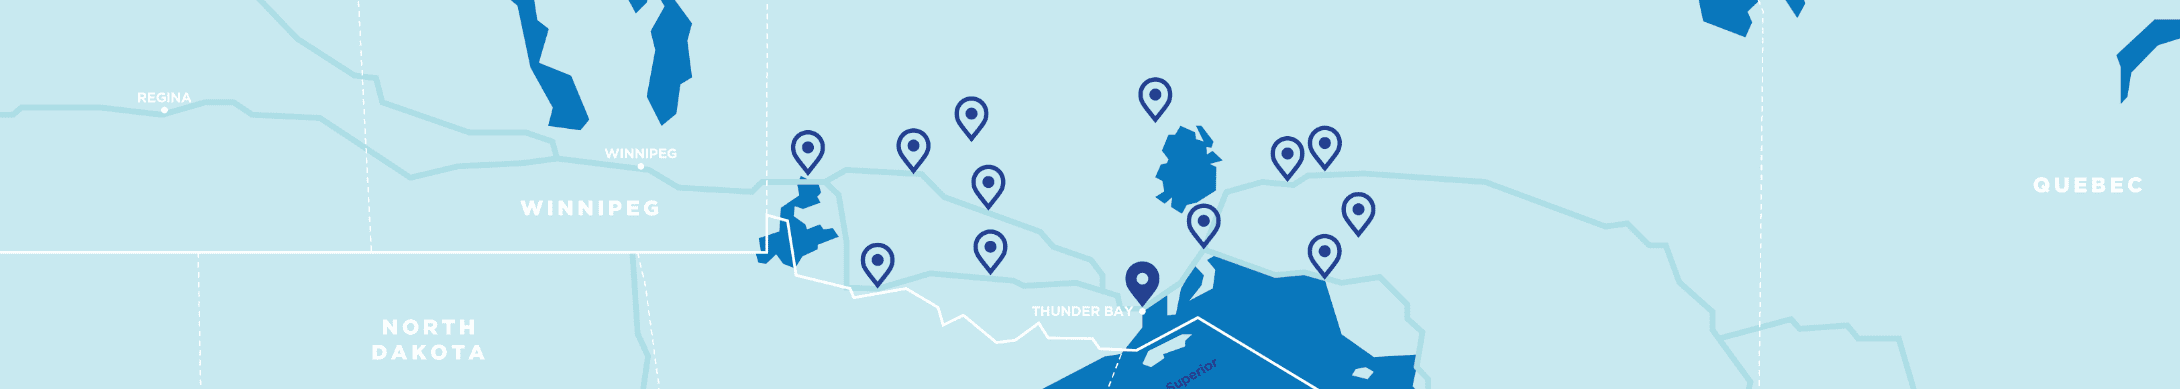 Map of Thunder Bay